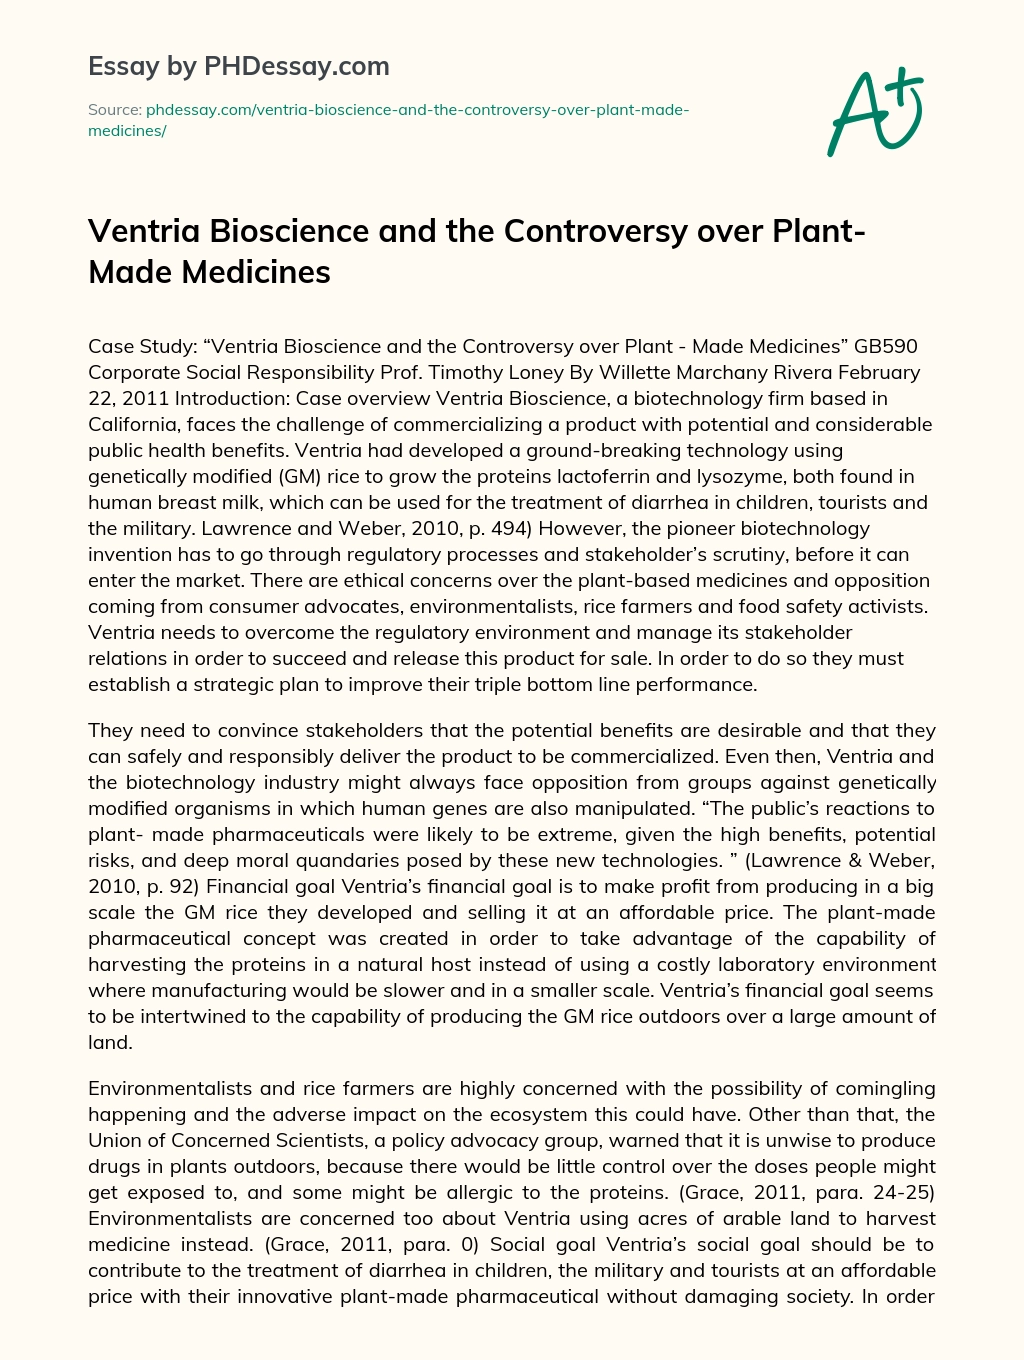 Ventria Bioscience and the Controversy over Plant-Made Medicines essay